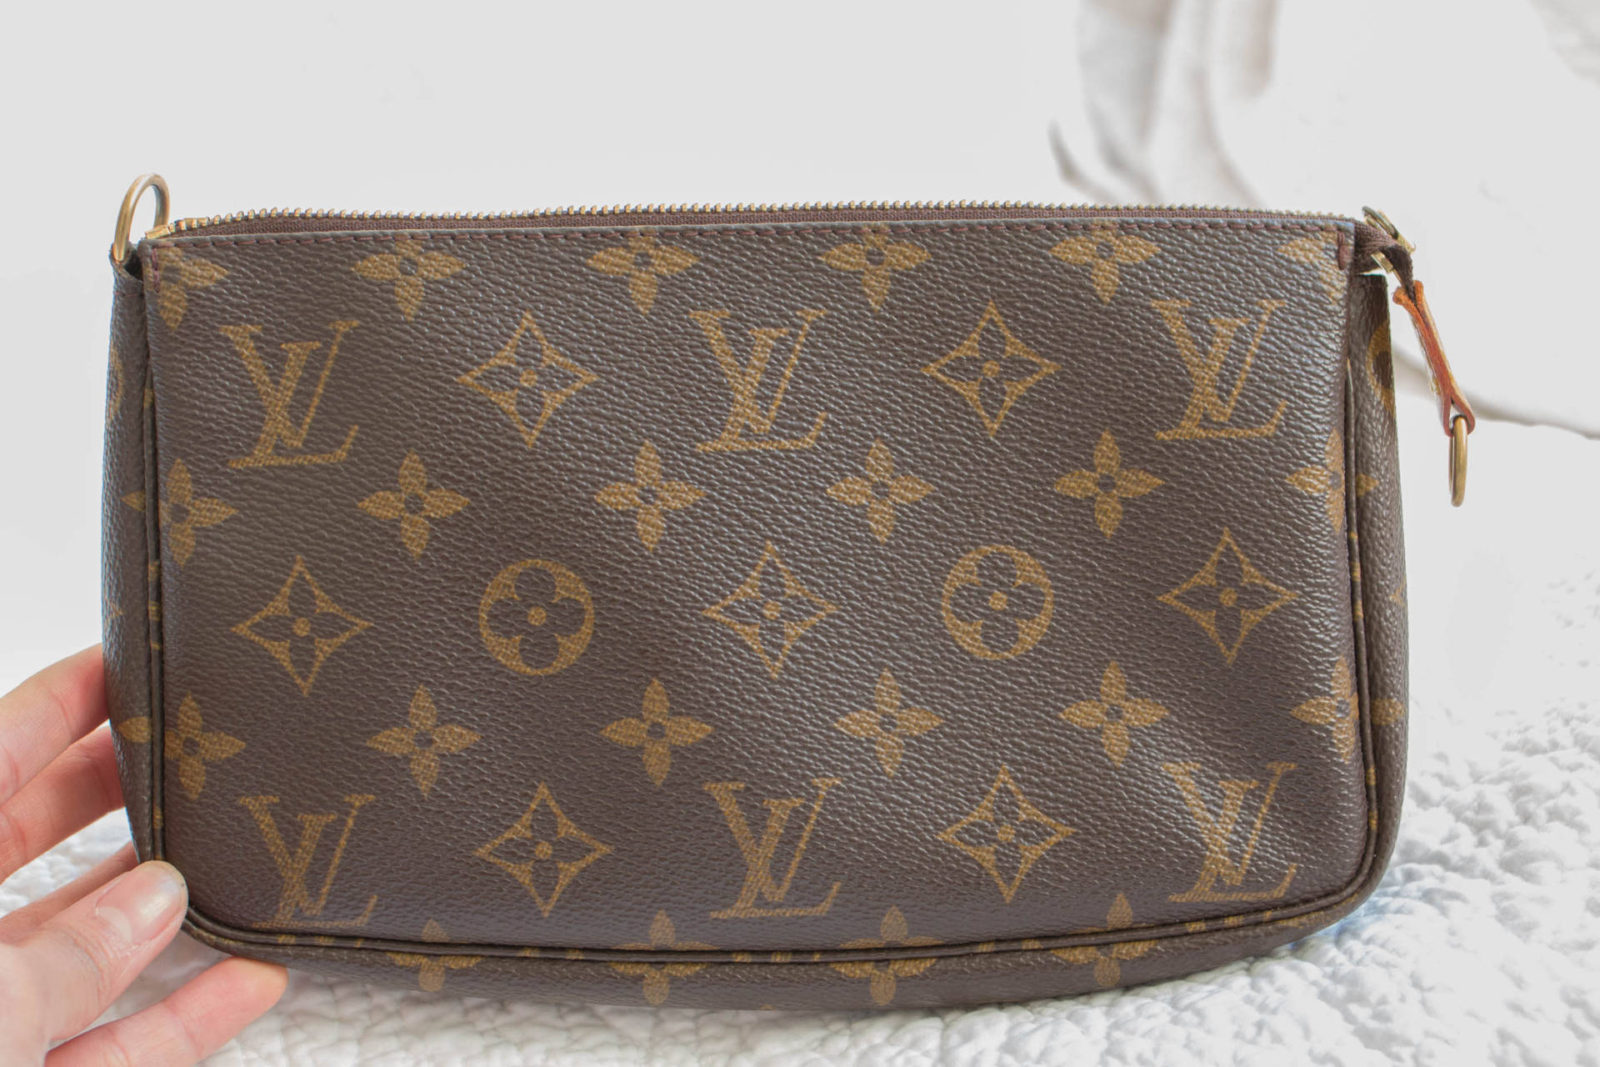 BLOG SALE - Chanel, Louis Vuitton, Celine Bags & Small leather goods ...